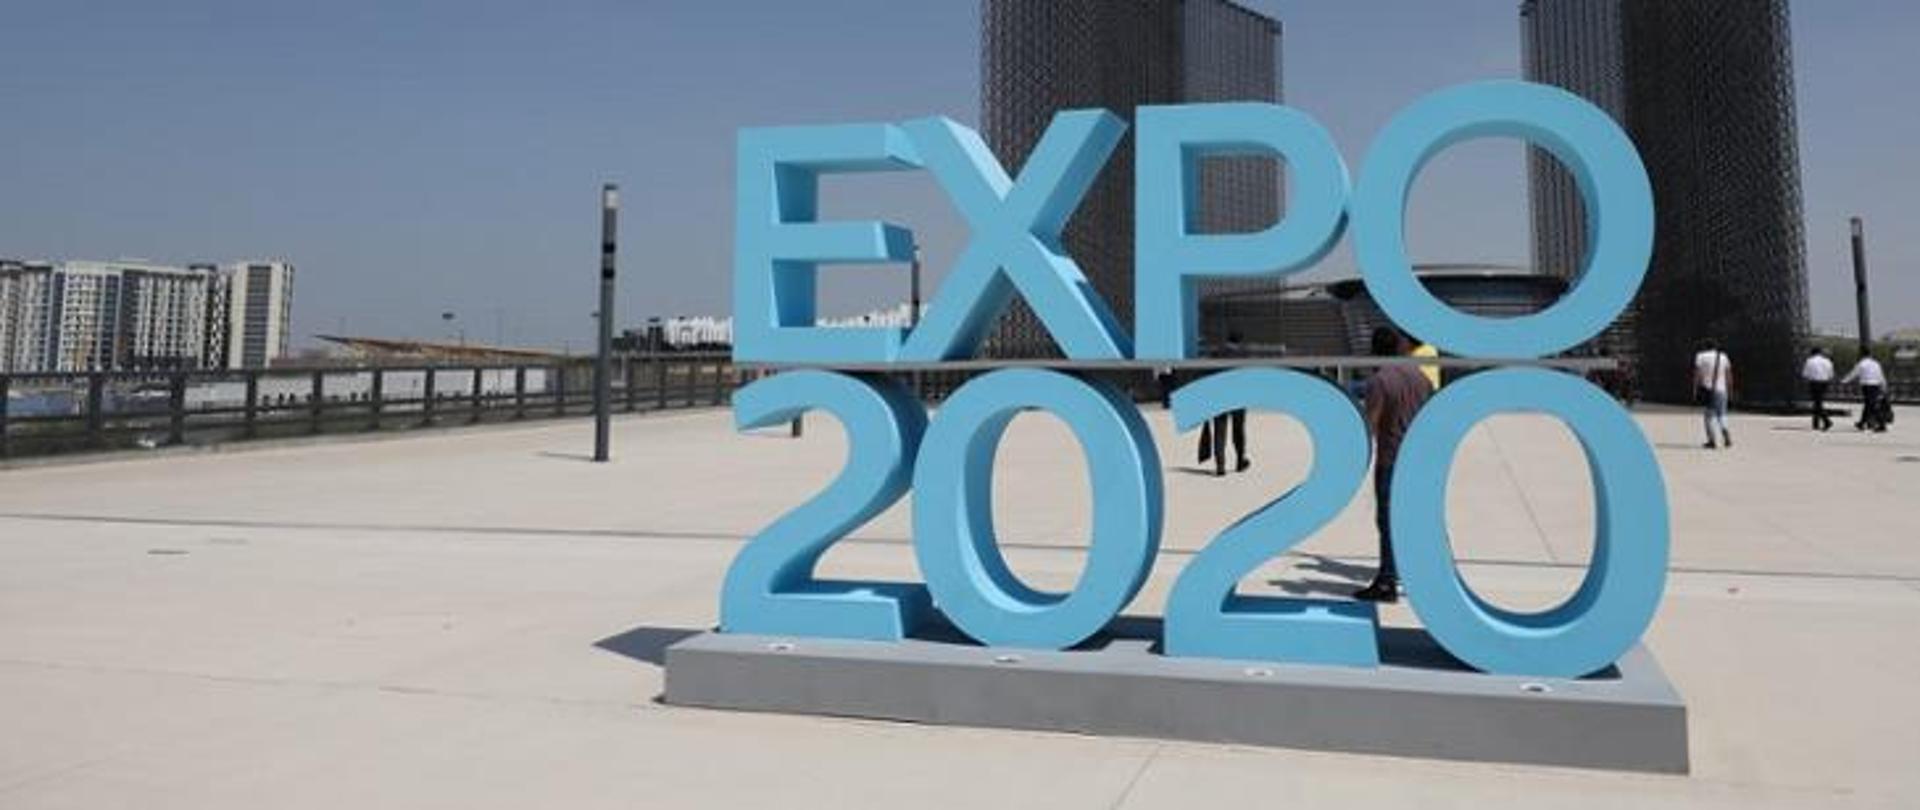 EXPO 2020 in Dubai